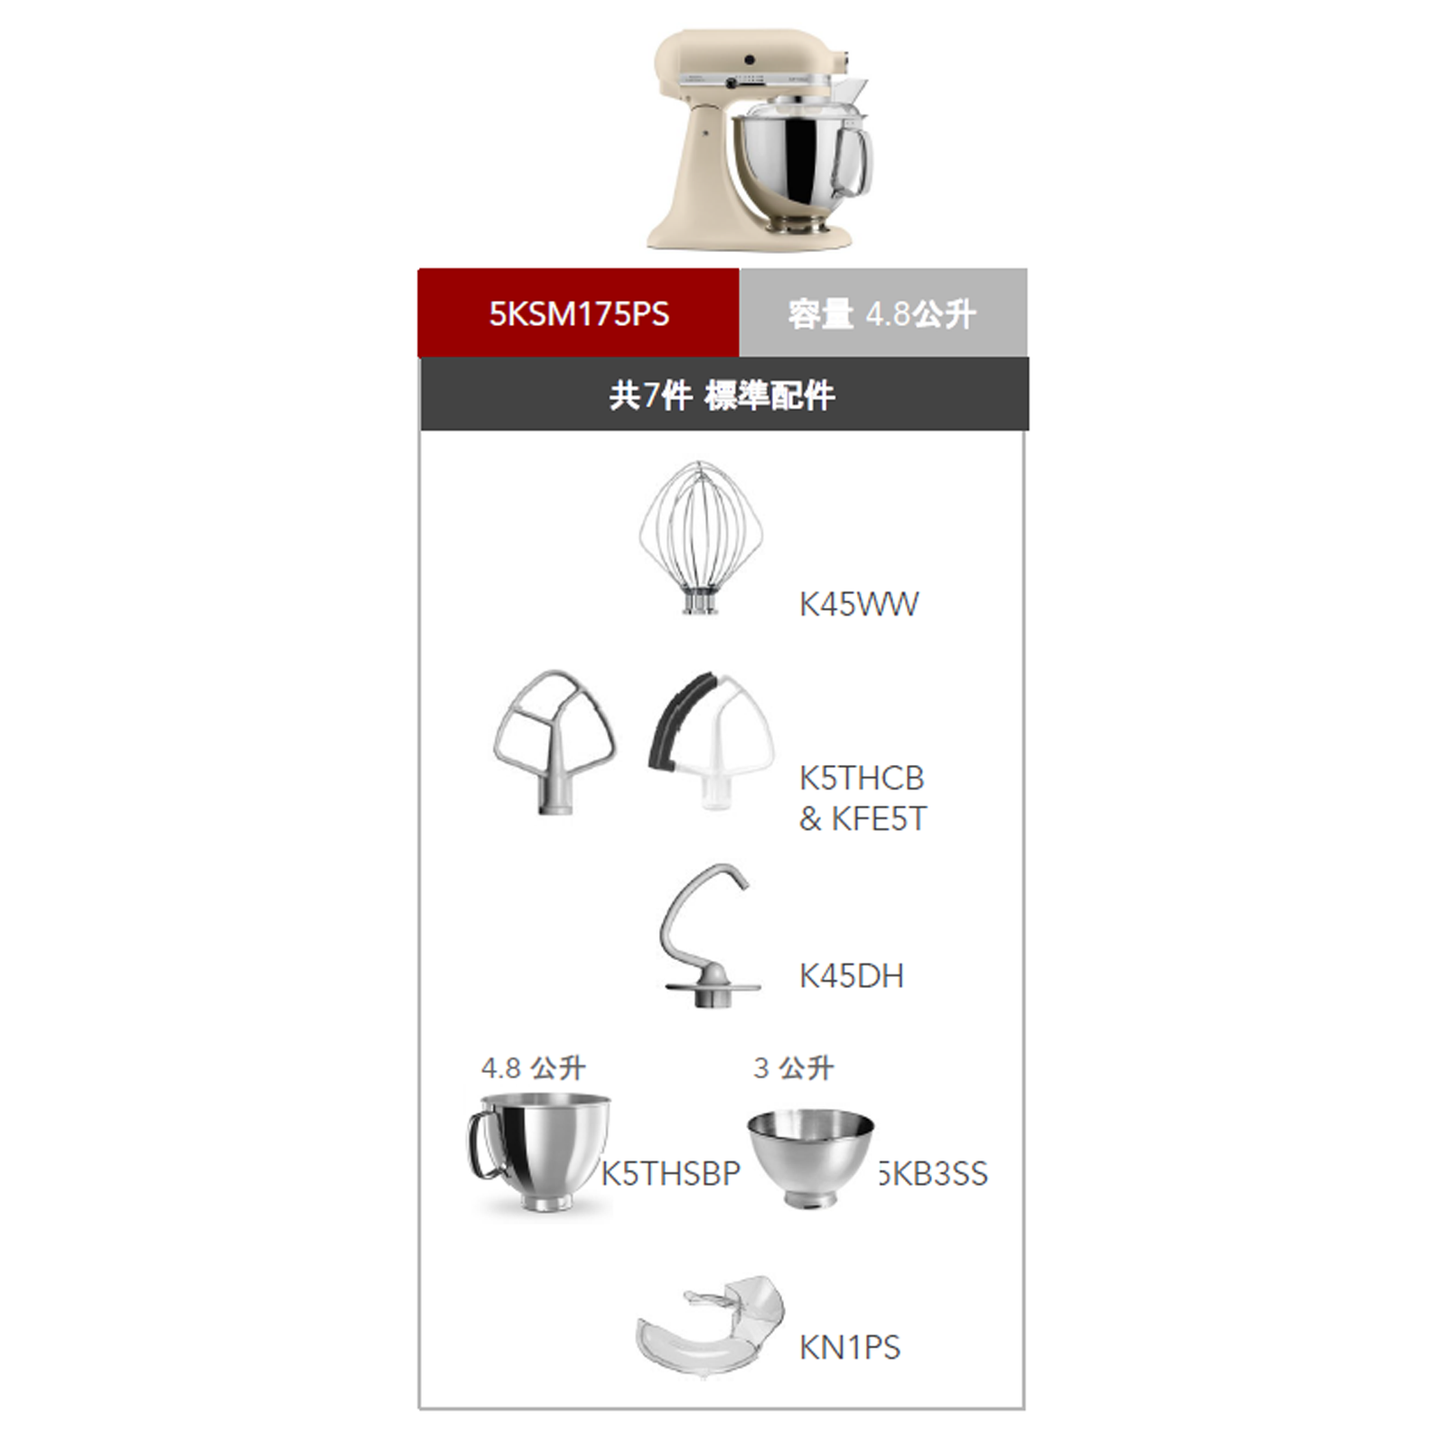 【KitchenAid】4.8L Artisan Tilt Head Stand Mixer (2 bowls, 2 Whisks) 5KSM175PS